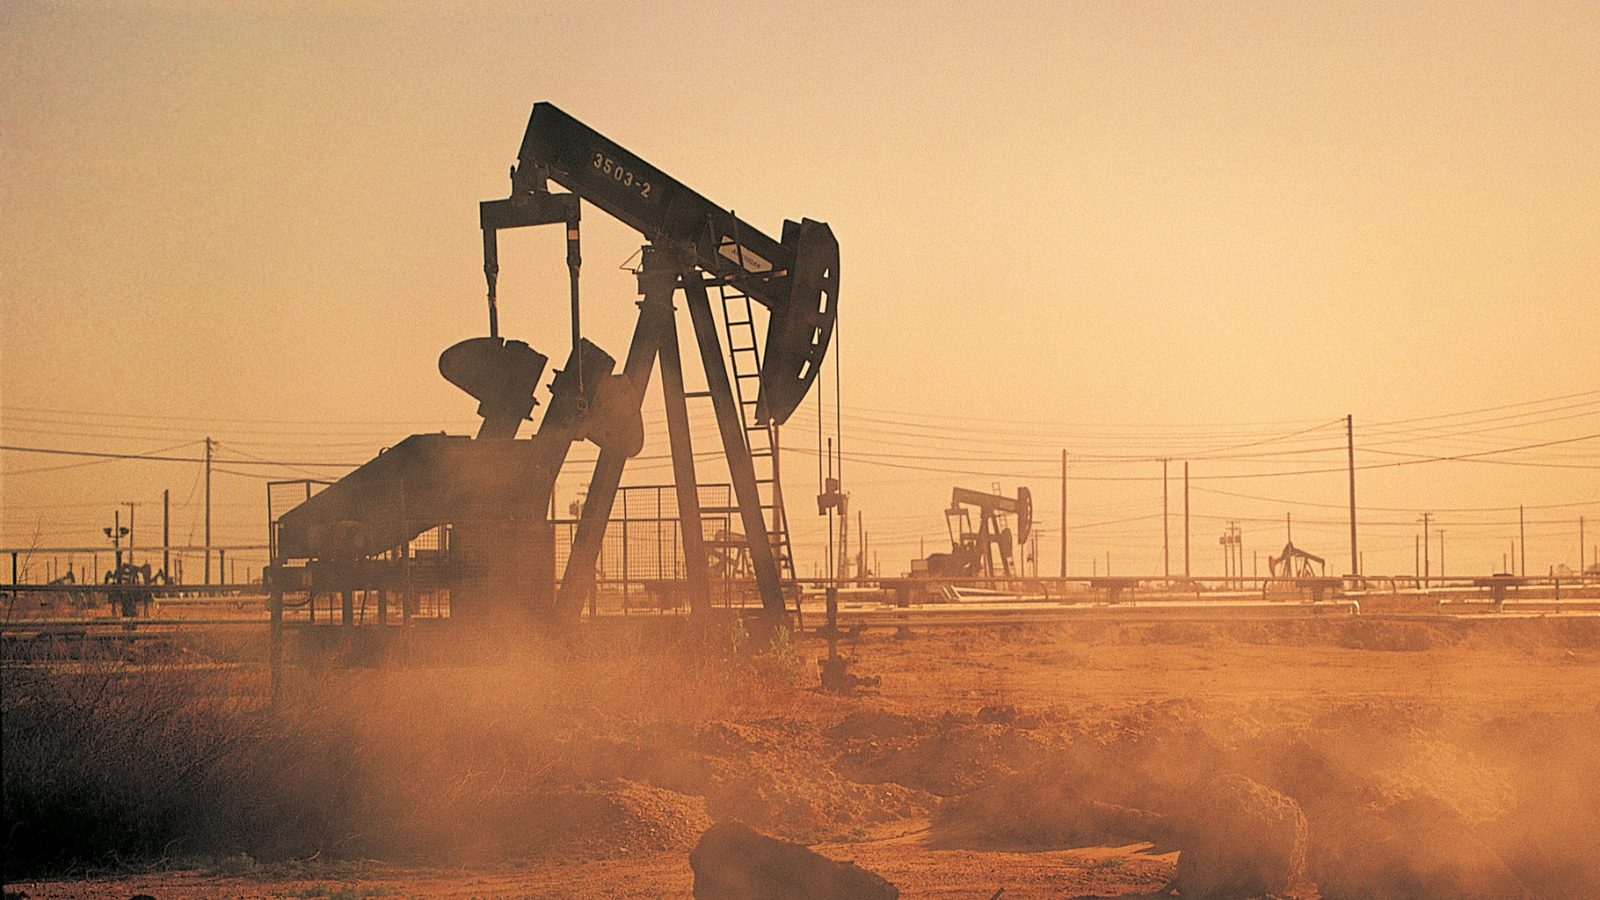 an oil pump jack in a dusty landscape against an orange sky